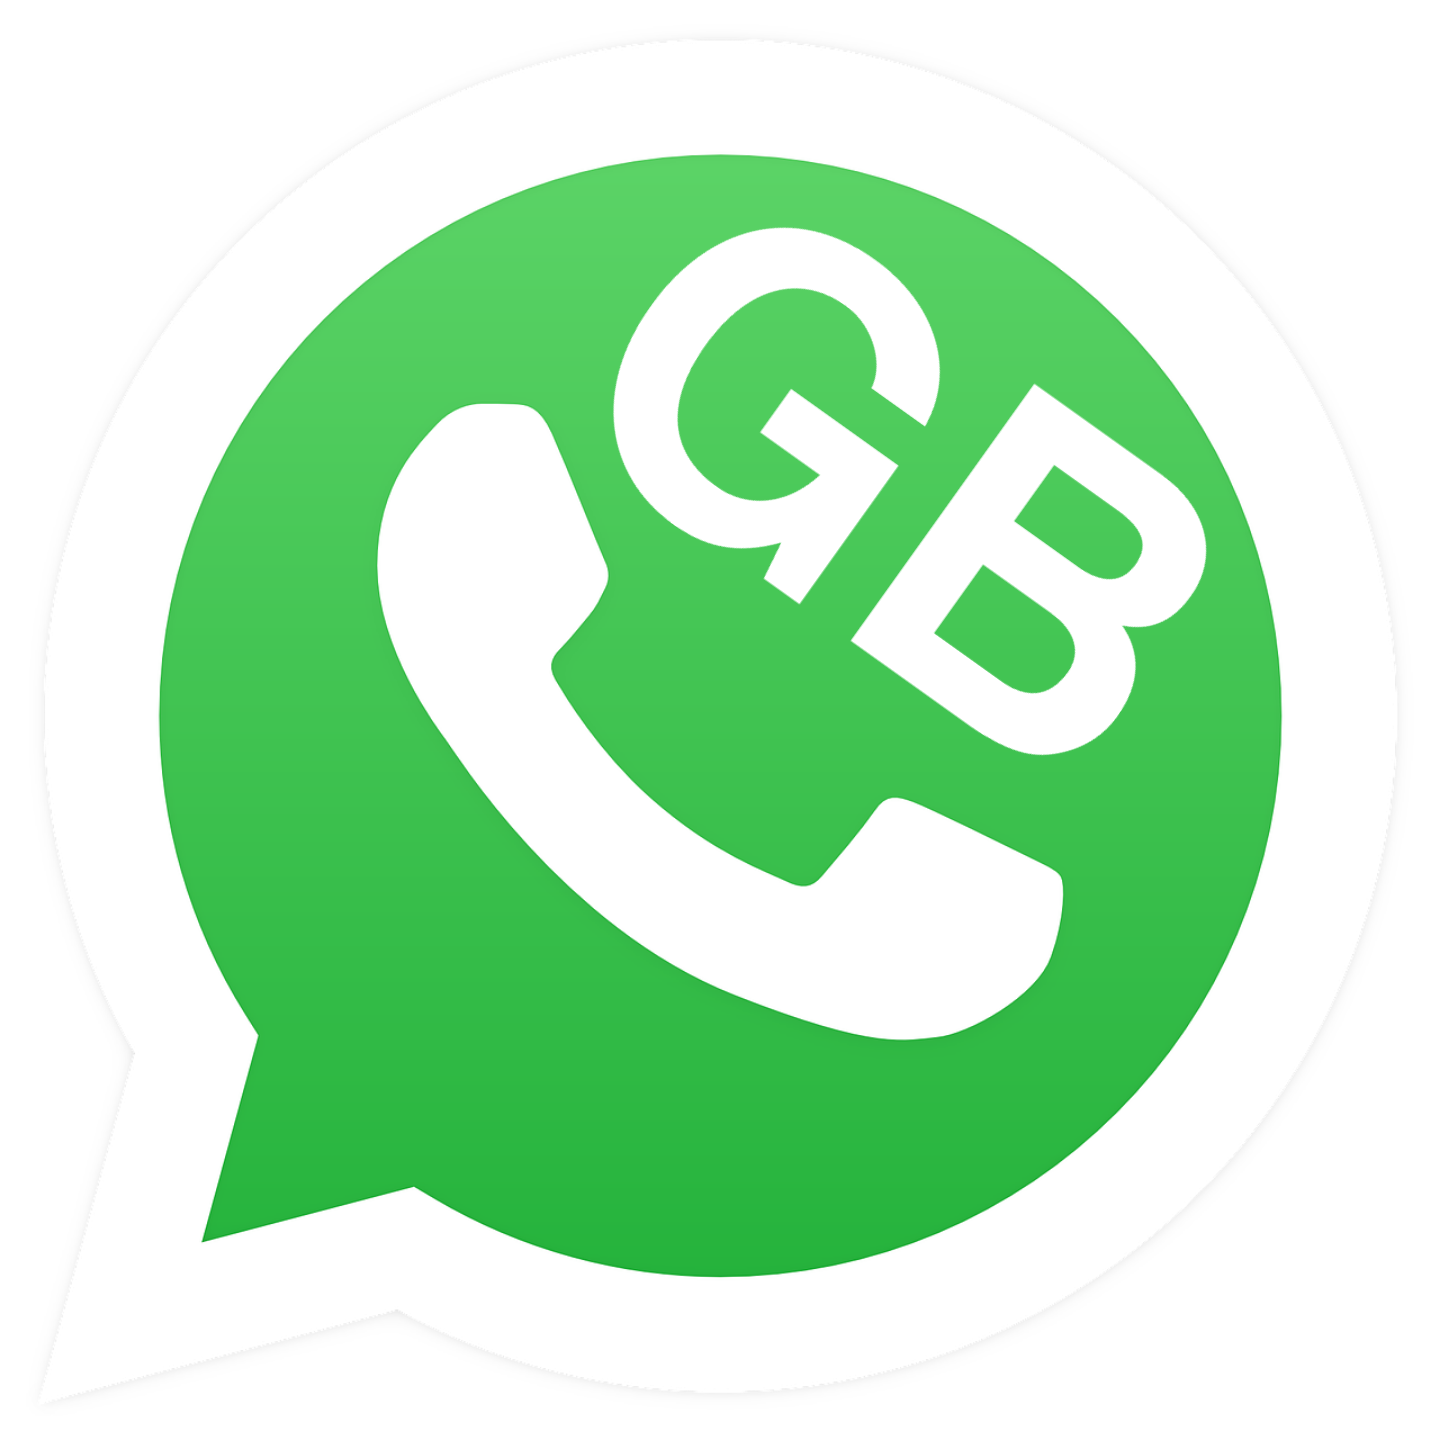 gb whatsapp pro apk download 2021